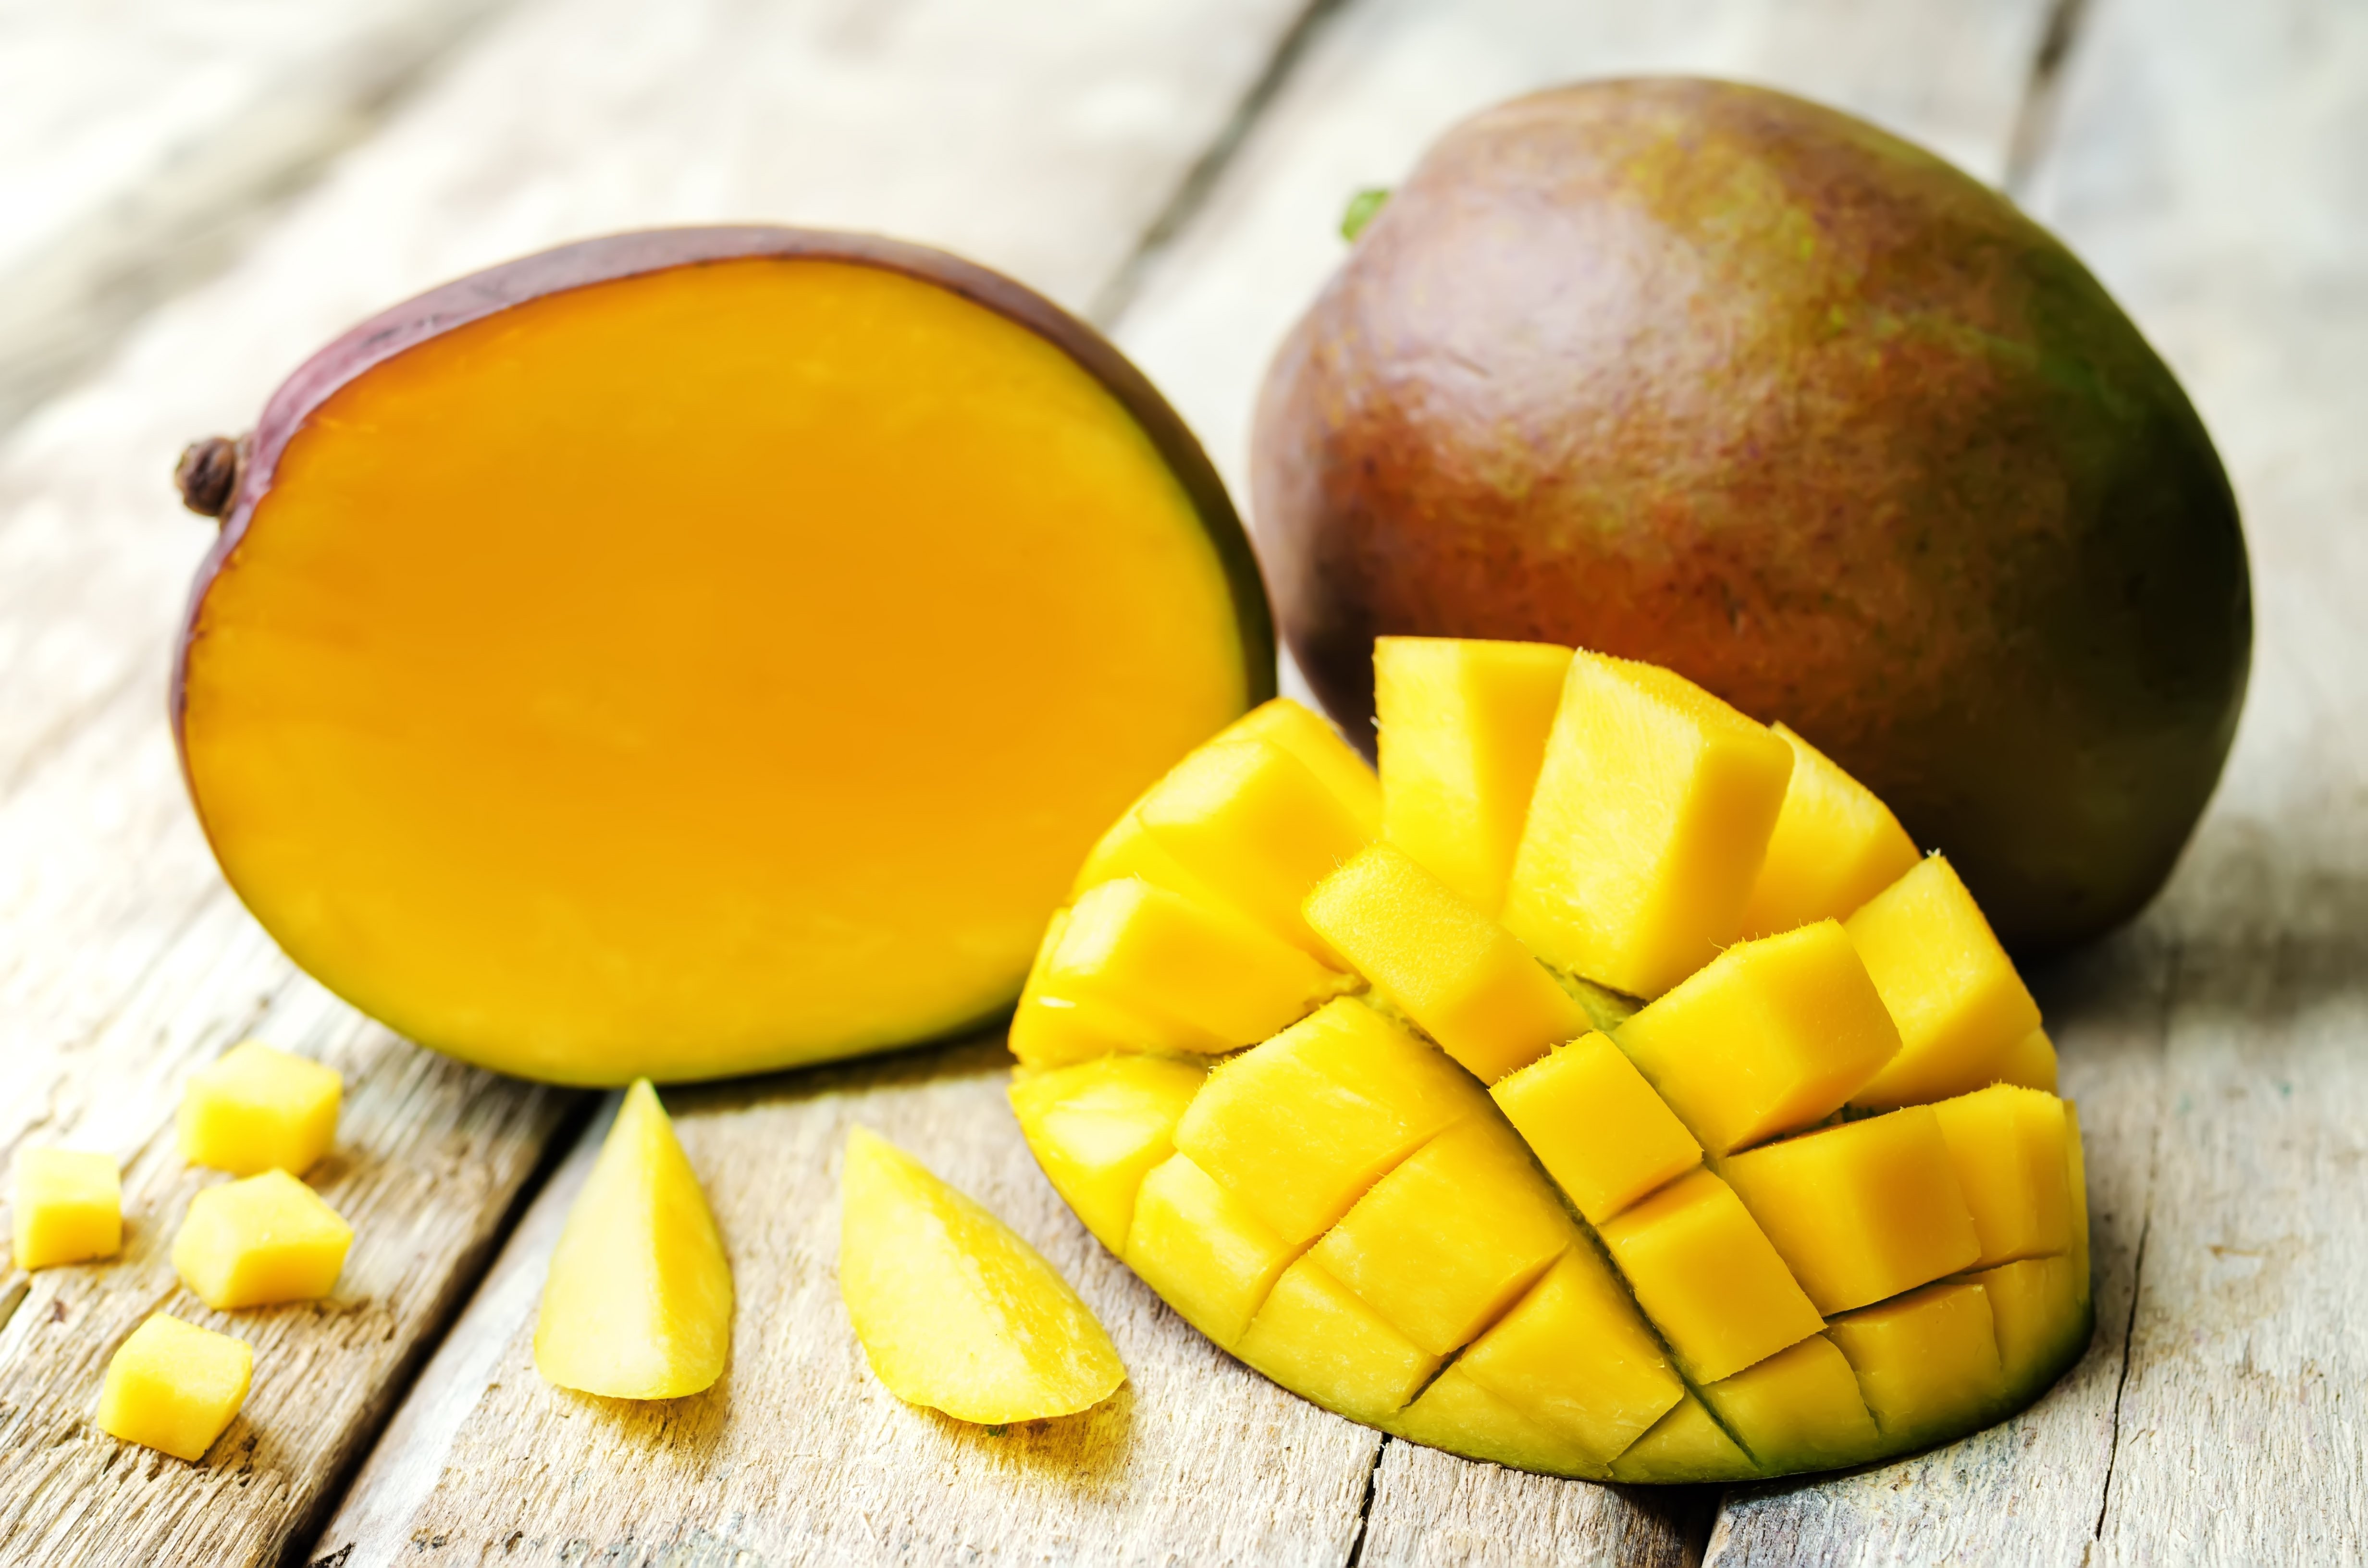 Mango. Незрелый манго. Спелое манго желтое. Манго желтое дерево. Манго желтое фото.